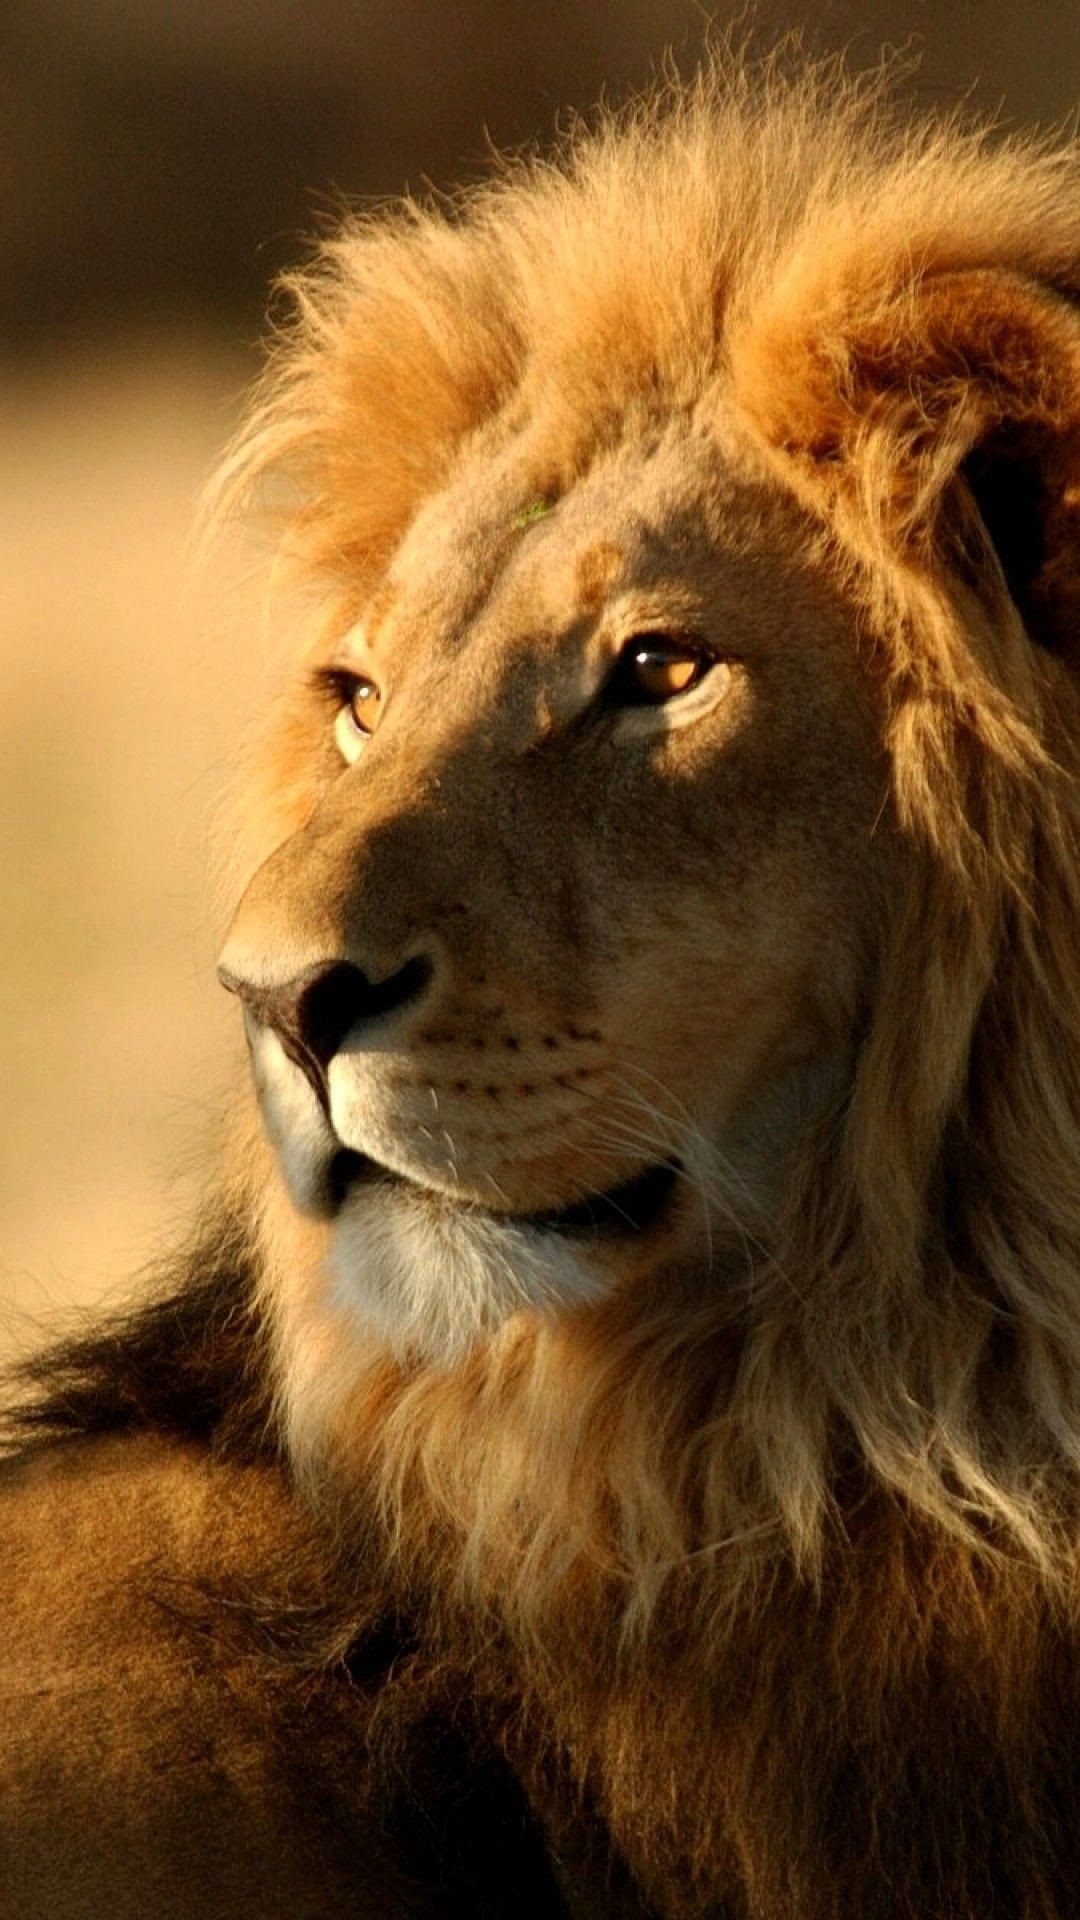 1080x1920  Lion Wallpaper Hd Animals Lion Iphone 6 Plus Wallpaper #bigcats